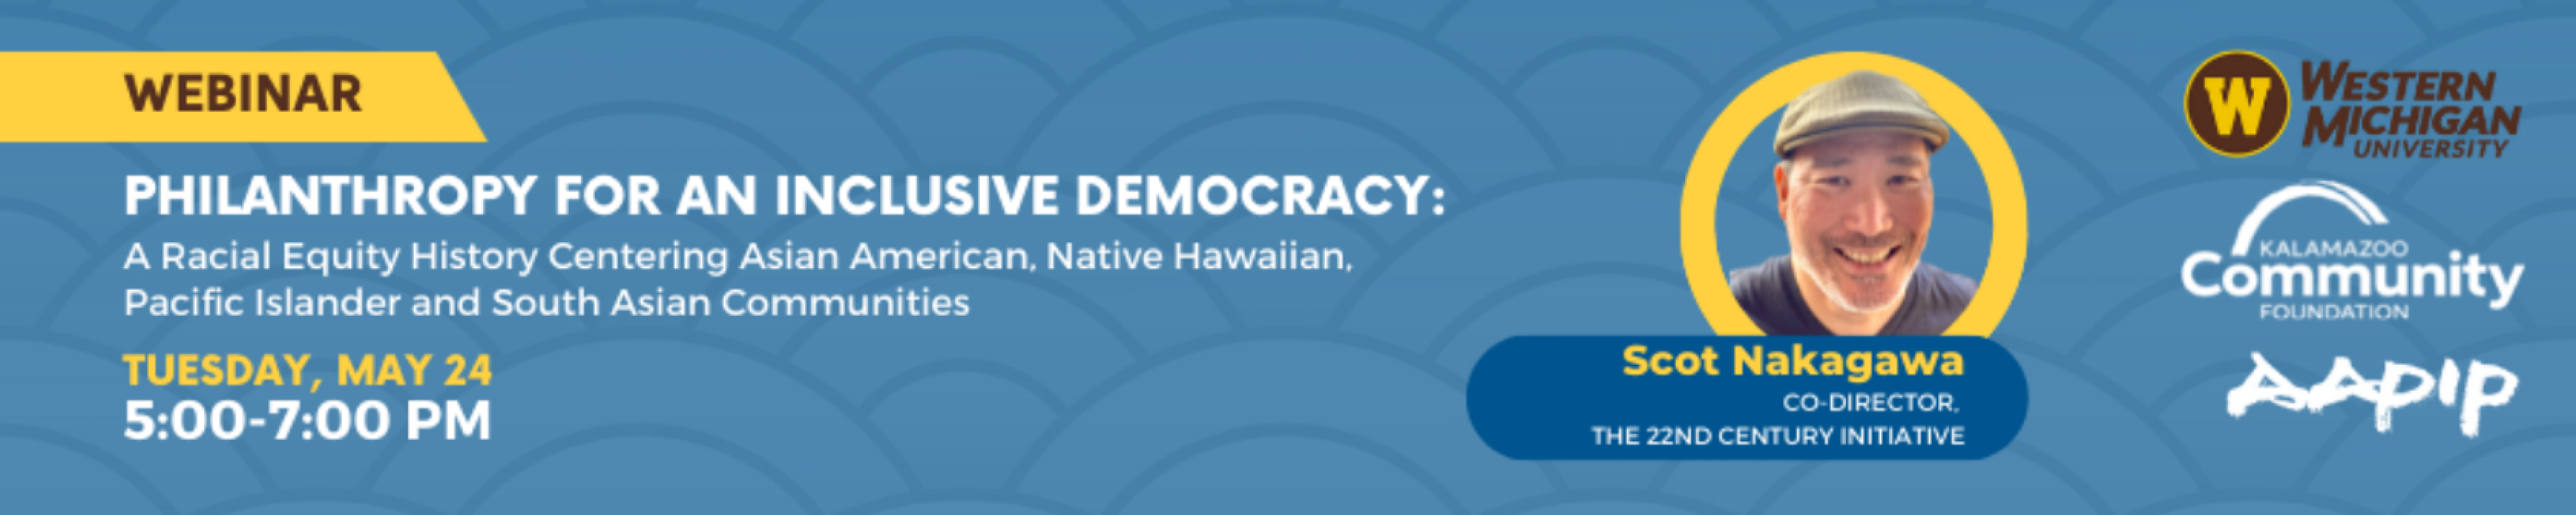 Philanthropy for an Inclusive Democracy: A Racial Equity History webinar